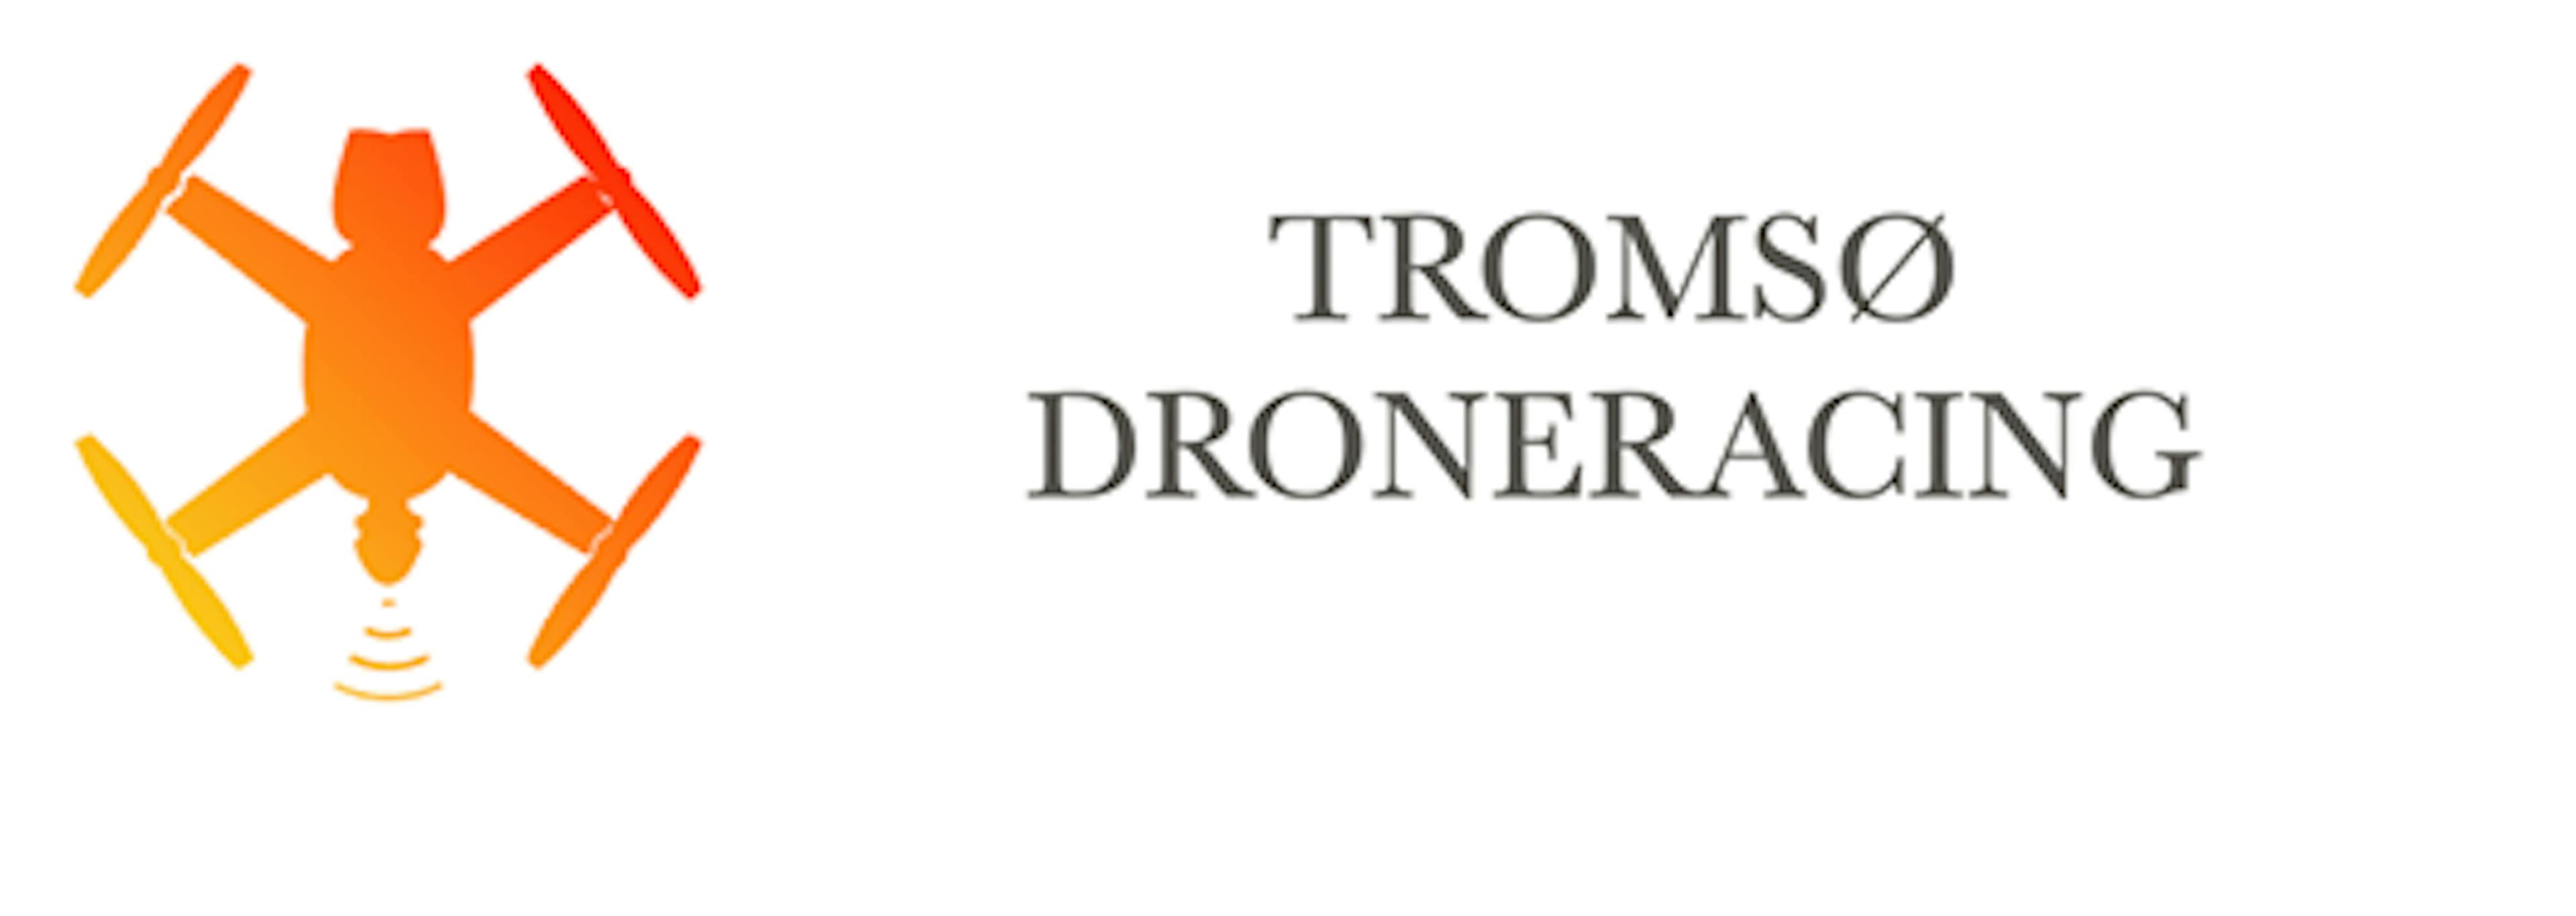 Droneracing